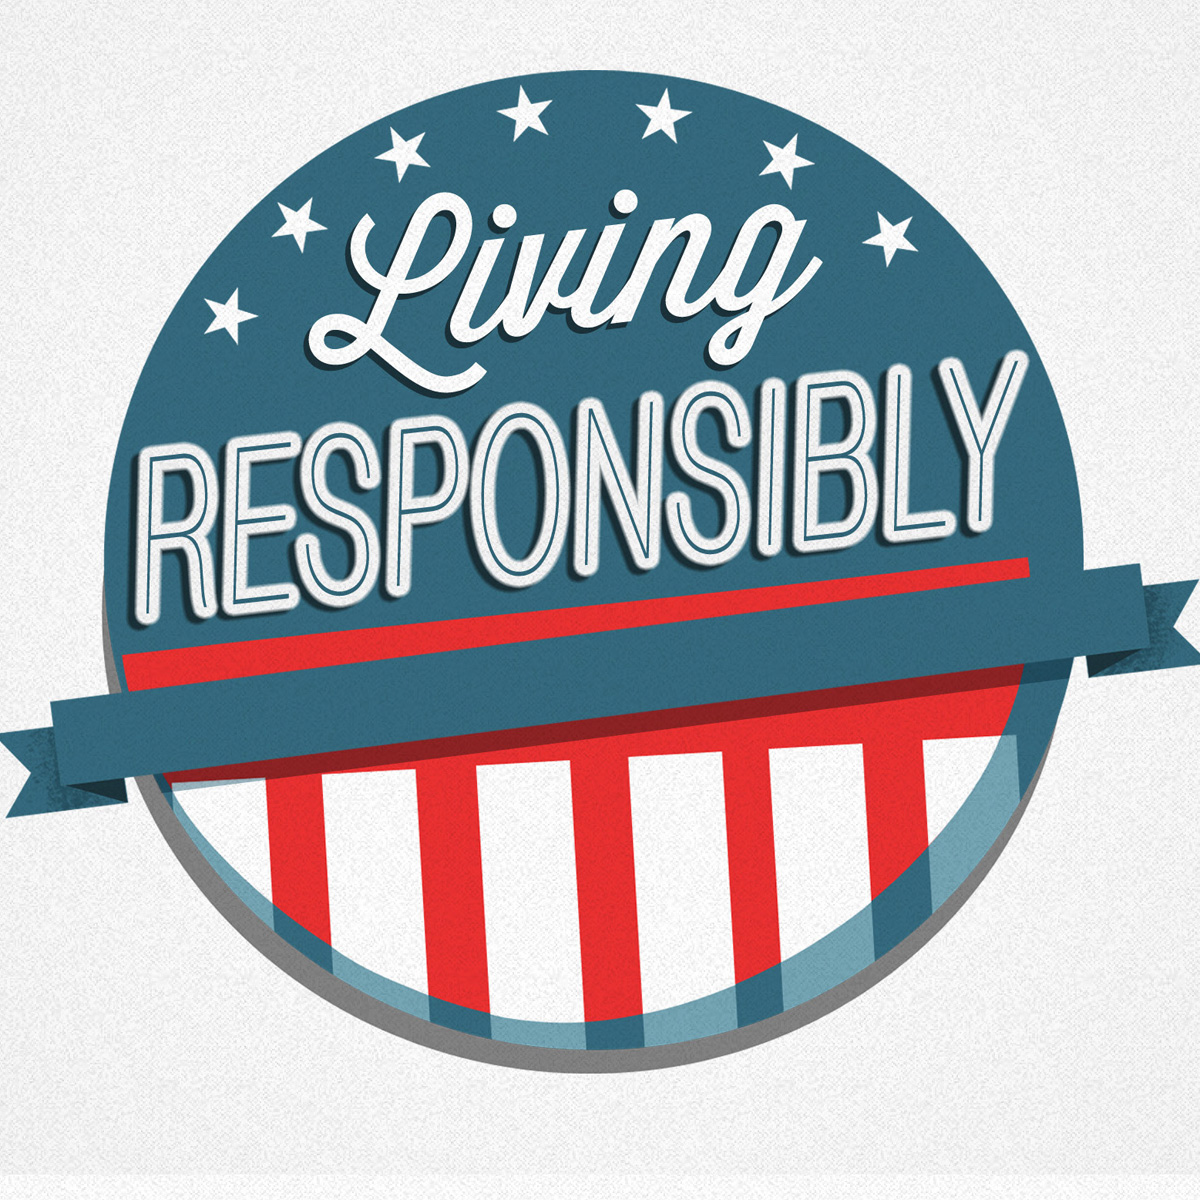 Living Responsibly as a Citizen